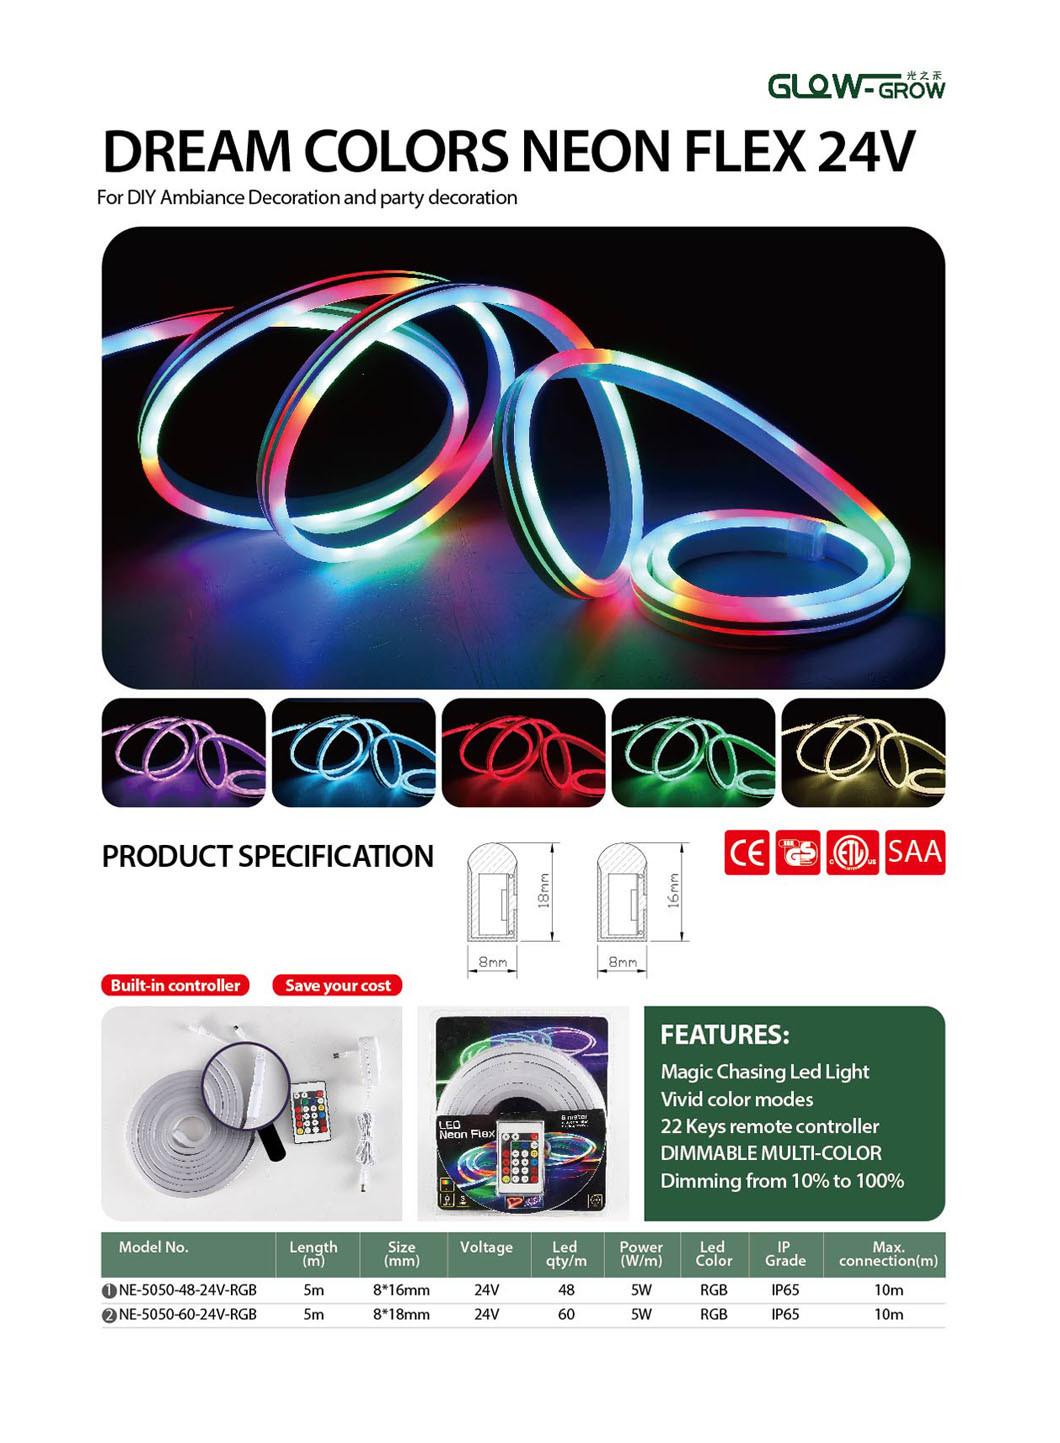 Wholesale IP65 Waterproof RGB LED Dream Neon Flex Light with Vivid Color Modes